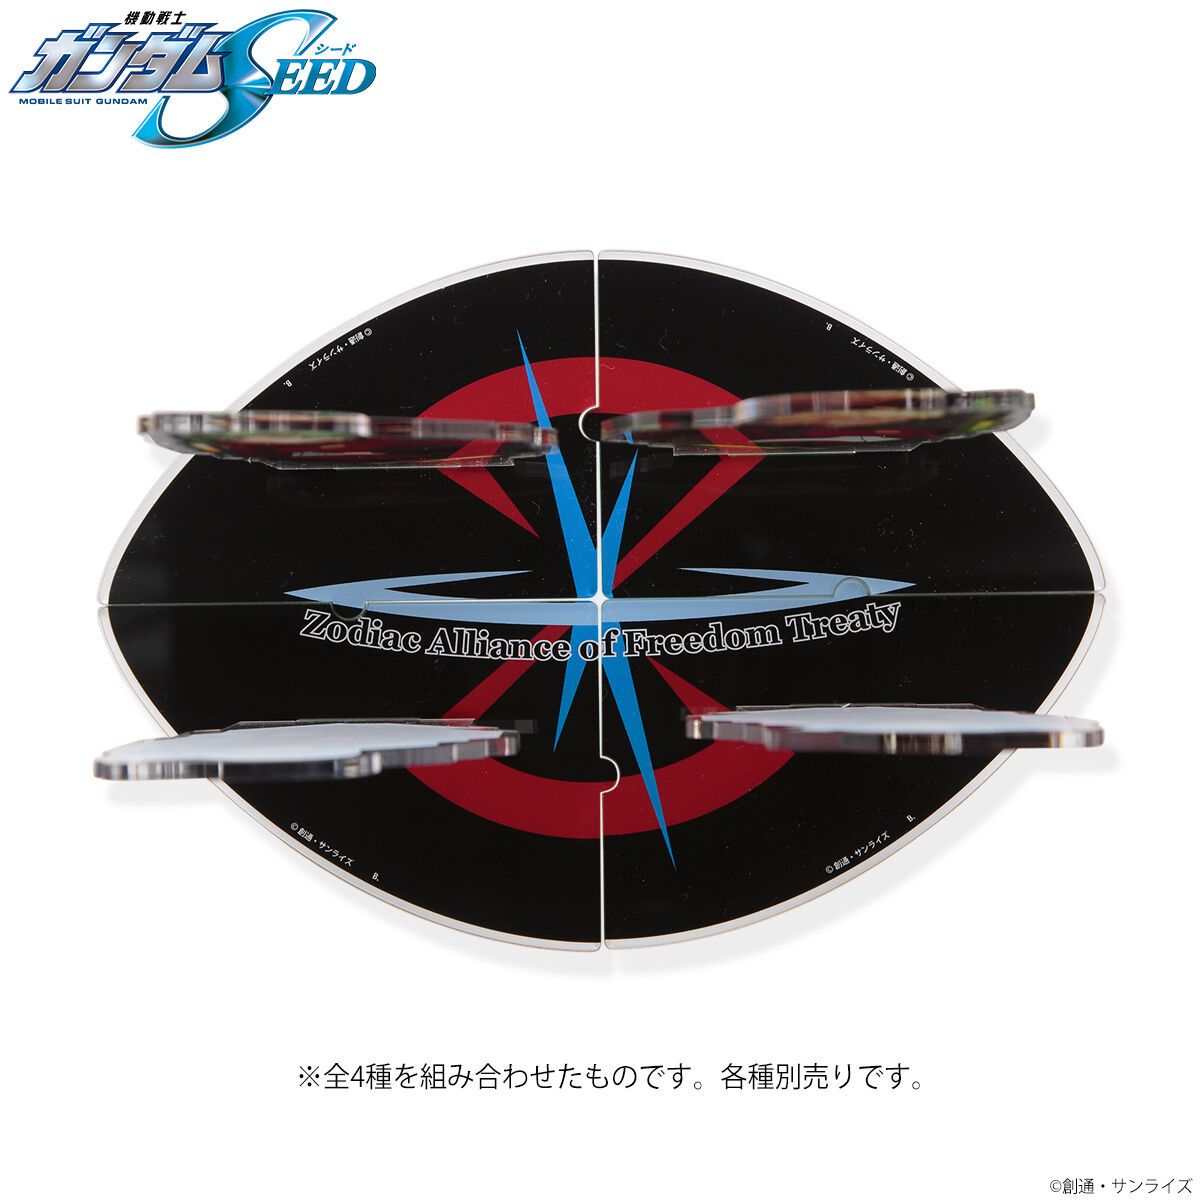 Acrylic Stand-Zodiac Alliance of Freedom Treaty Pilot of Mobile Suit Gundam Seed